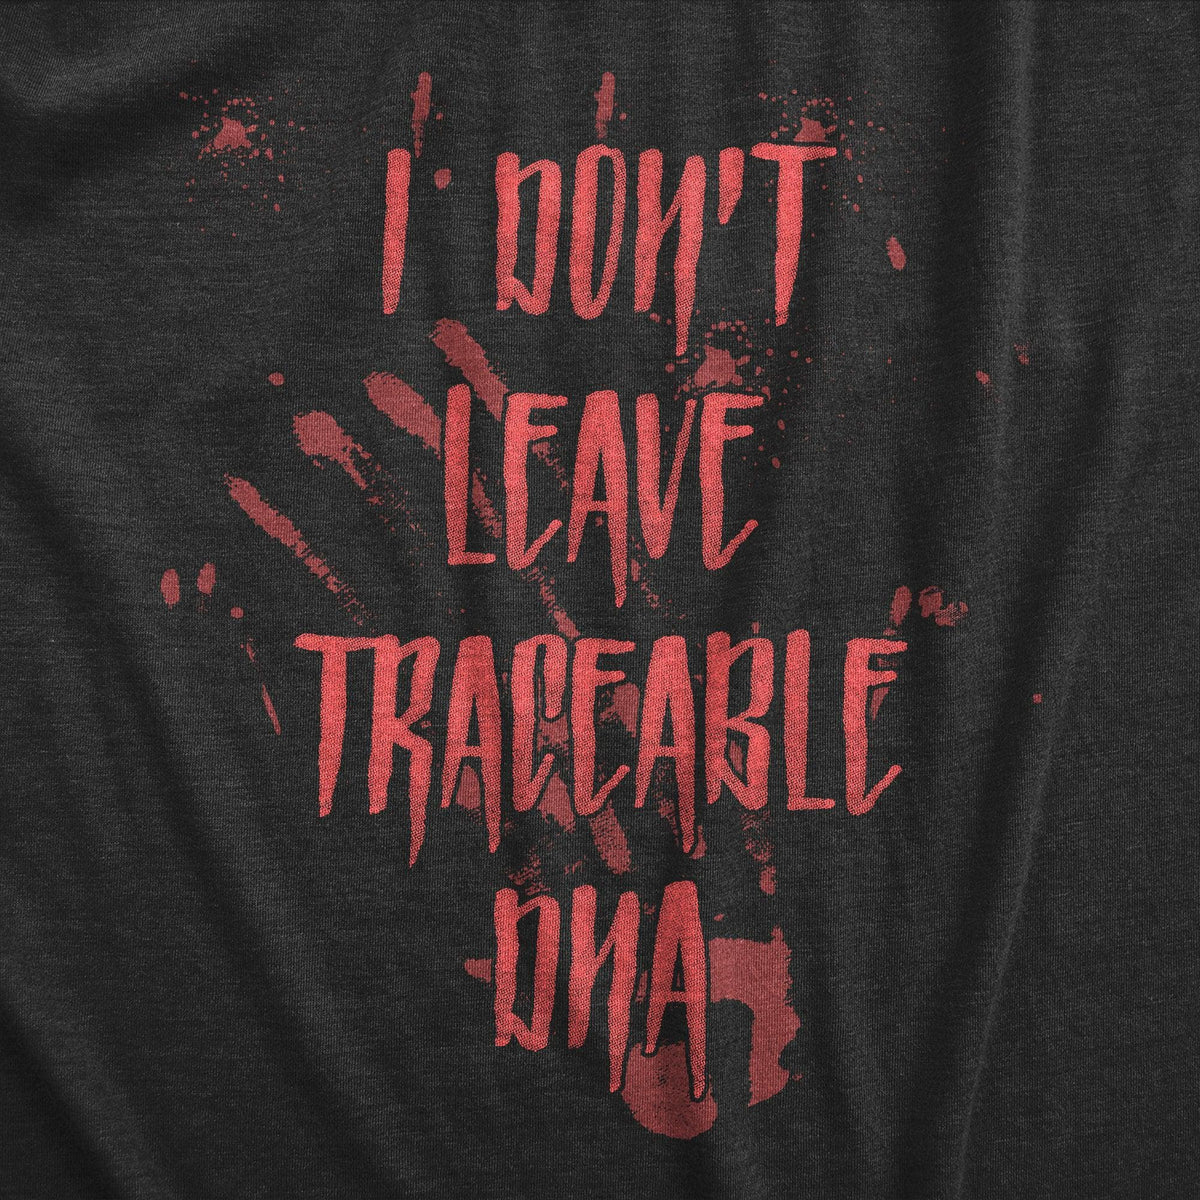 I Dont Leave Tracebale DNA Women&#39;s Tshirt  -  Crazy Dog T-Shirts